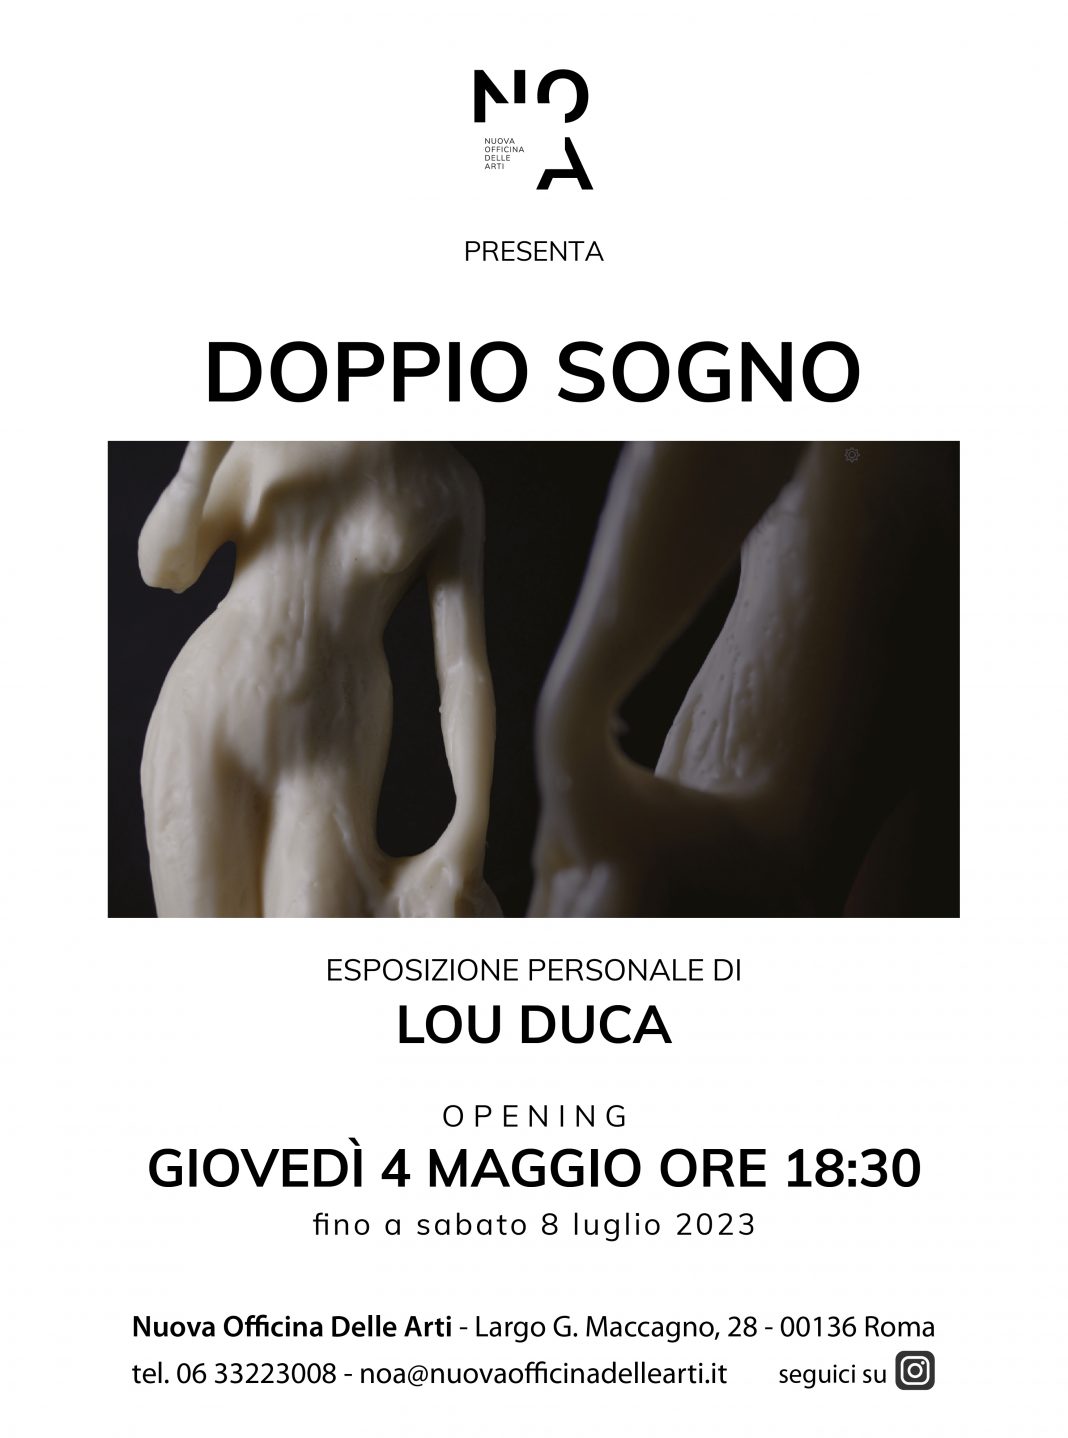 Lou Duca – Doppio Sognohttps://www.exibart.com/repository/media/formidable/11/img/95c/invito-Mostra-1068x1438.jpeg